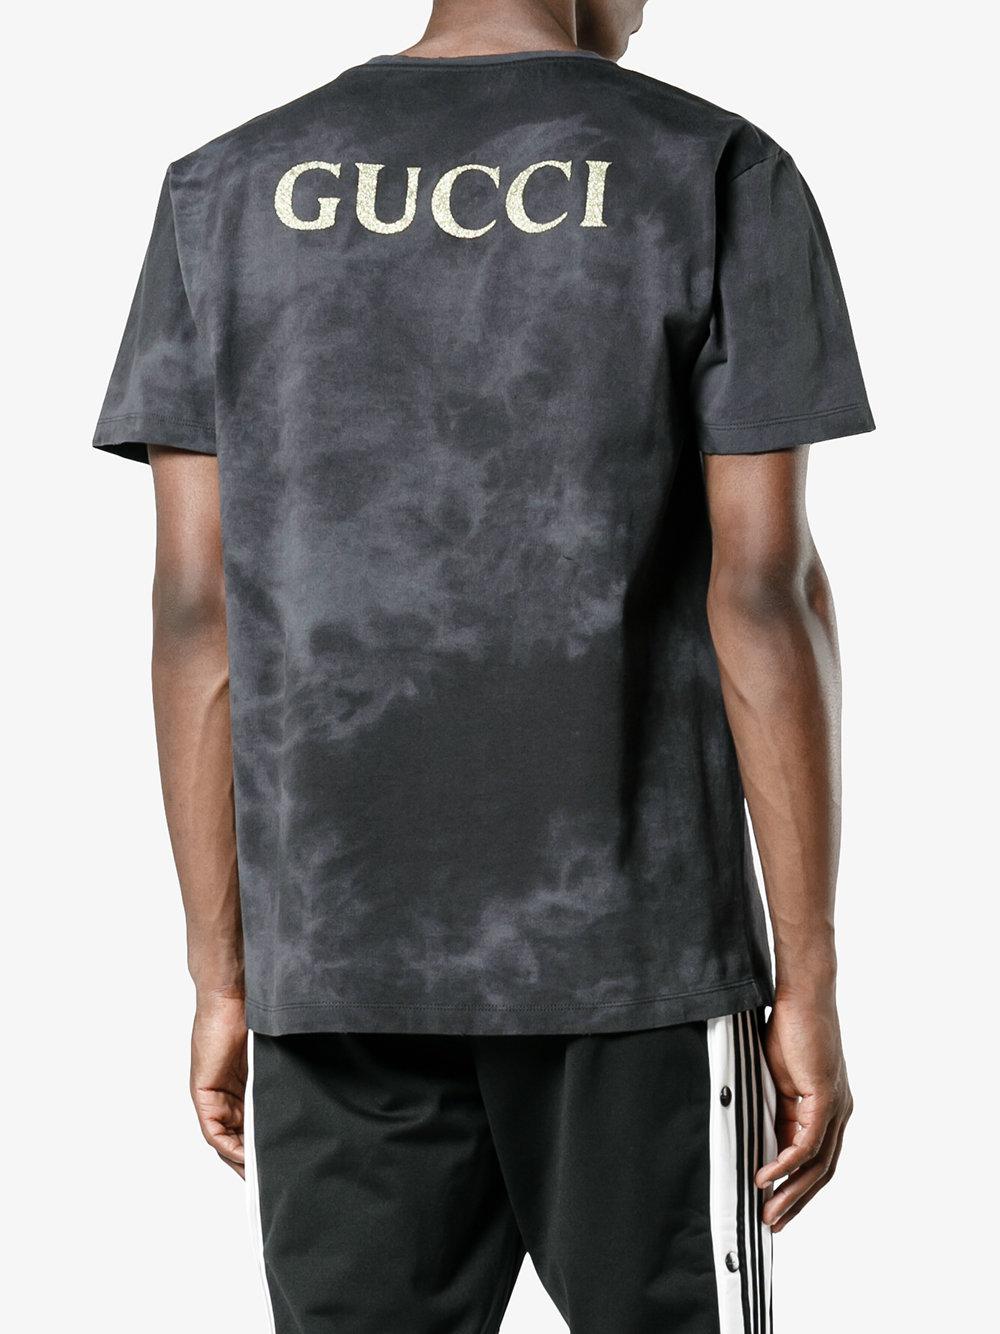 Gucci Ac/dc Print Tie-dye T-shirt in Black for Men - Lyst